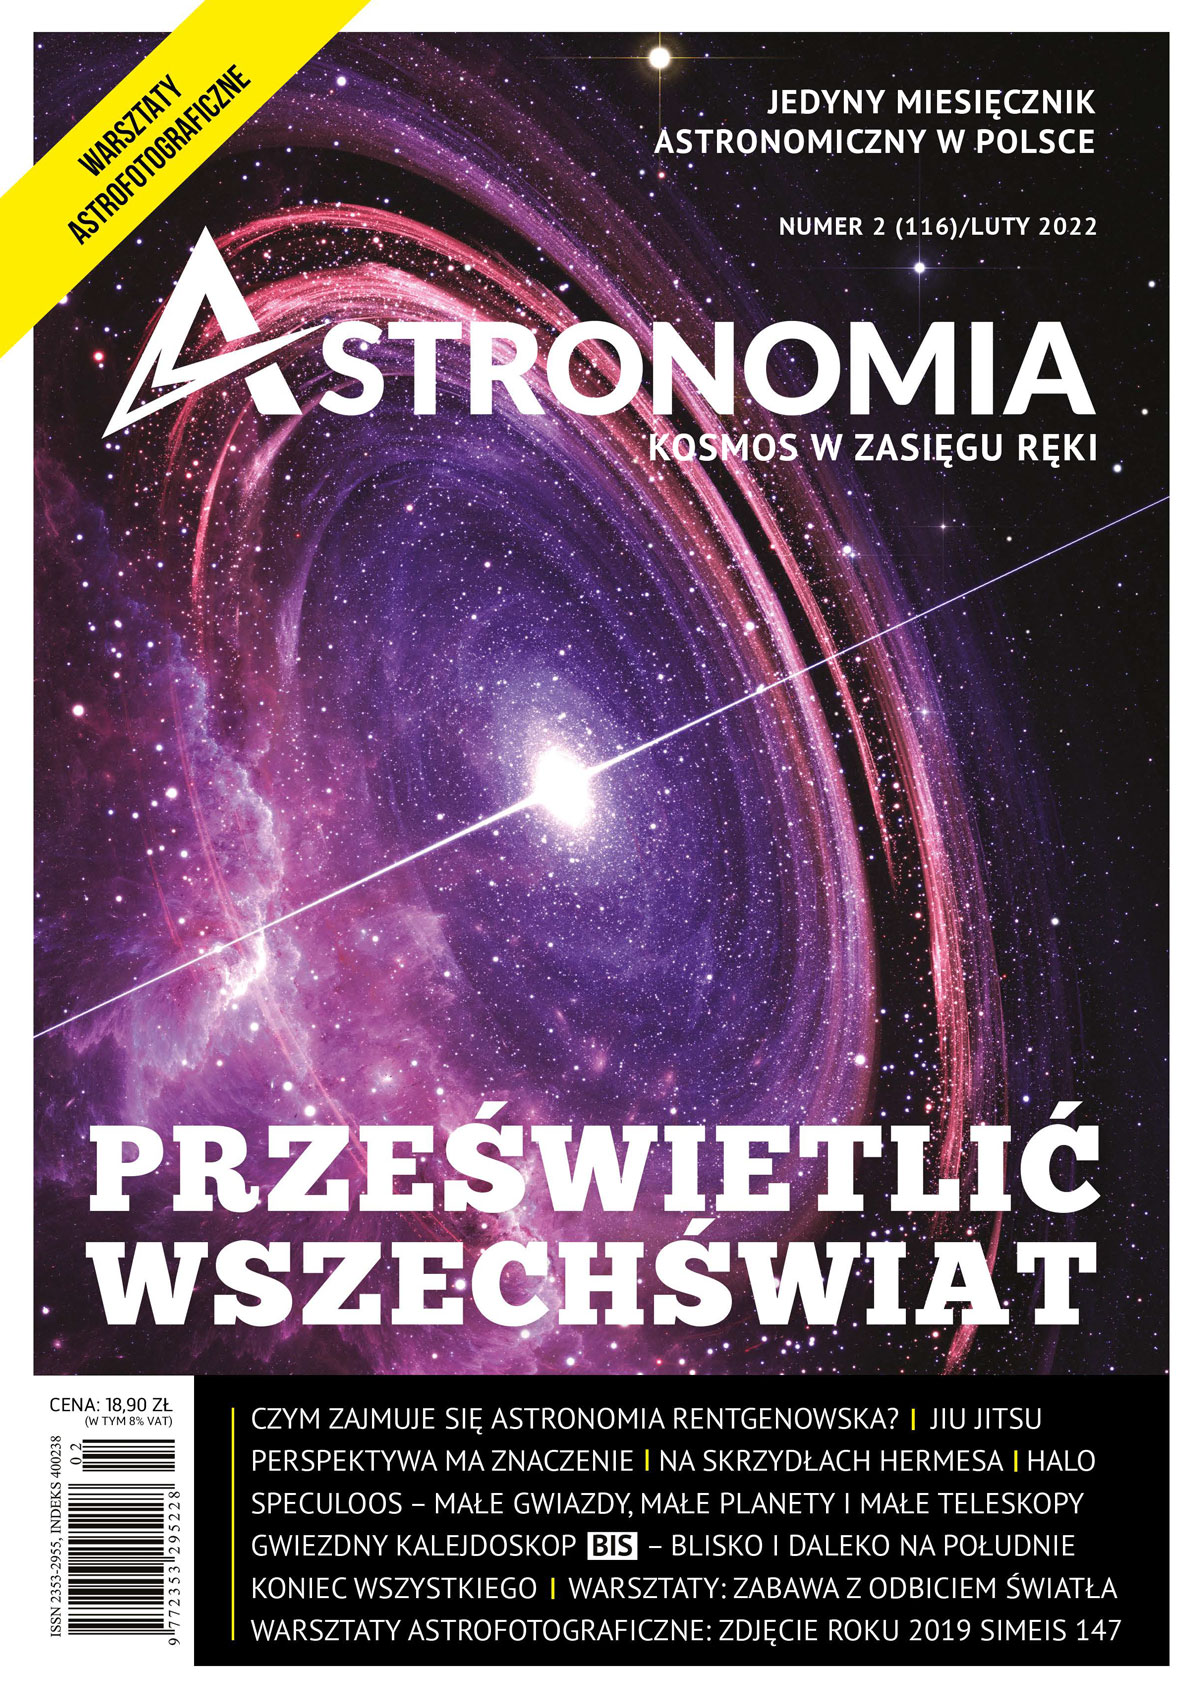 Astronomia - luty 2022 (116)